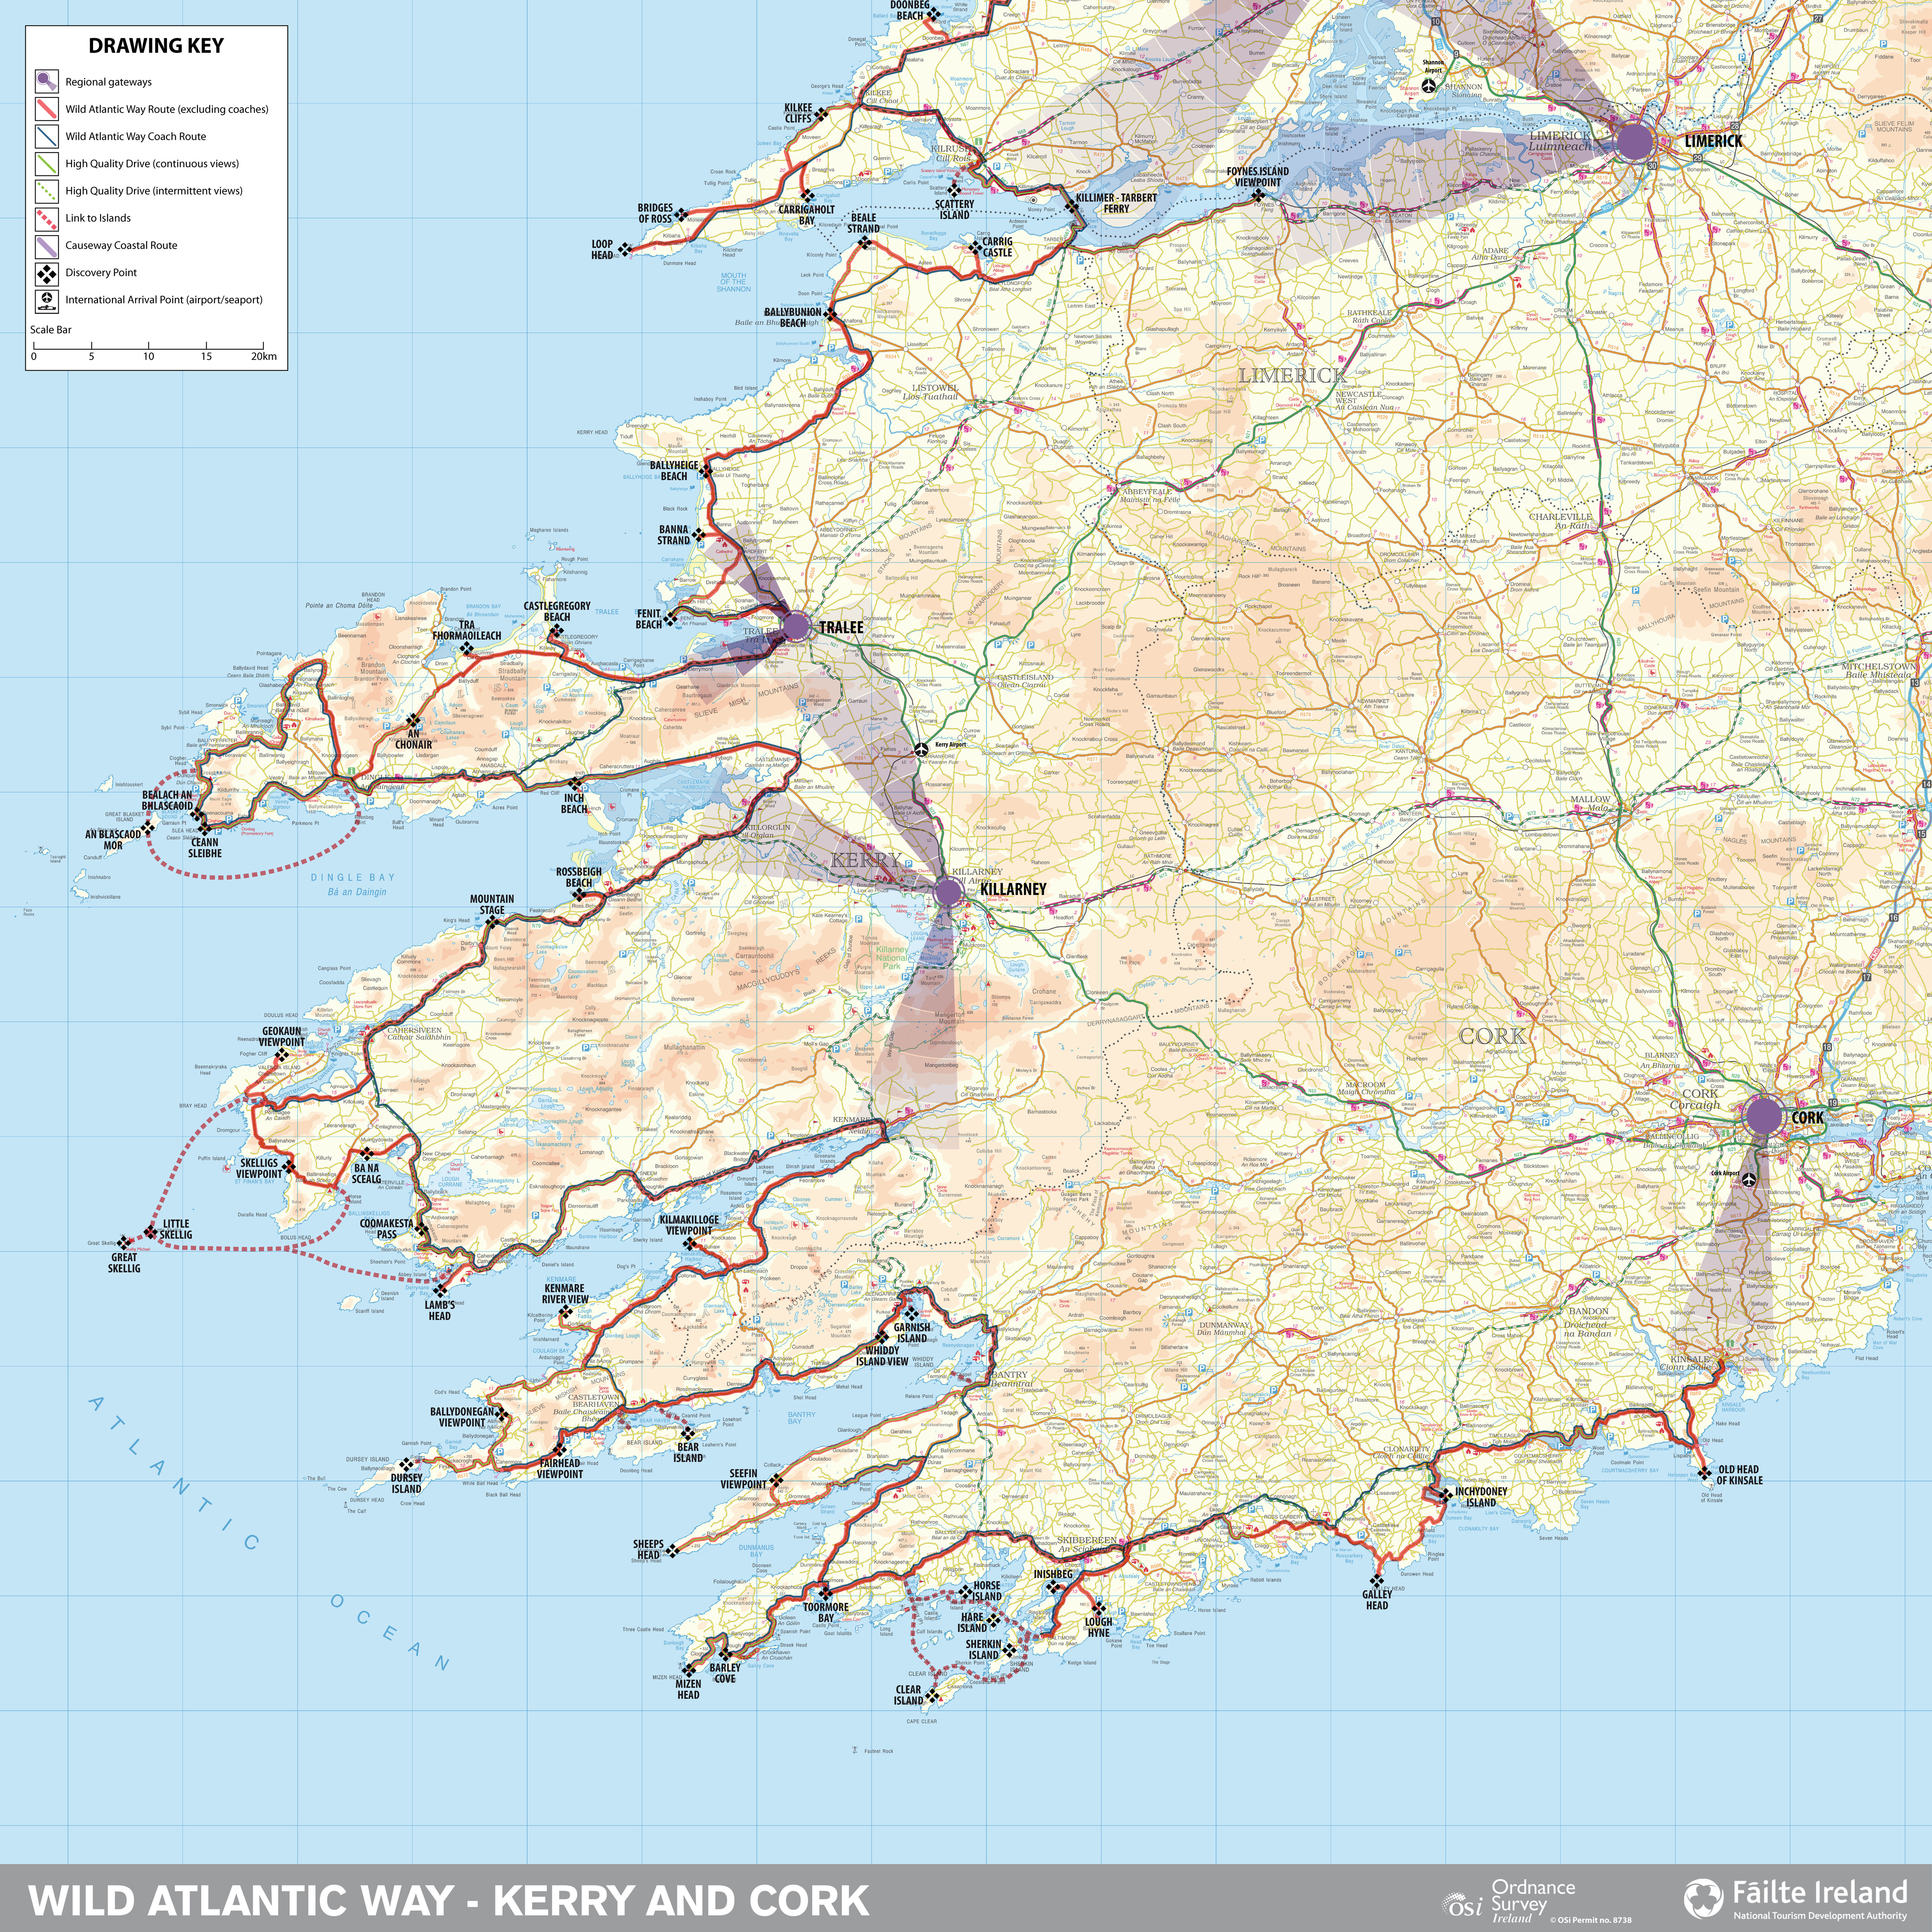 Failte Ireland - Your views sought to shape Wild Atlantic Way ...